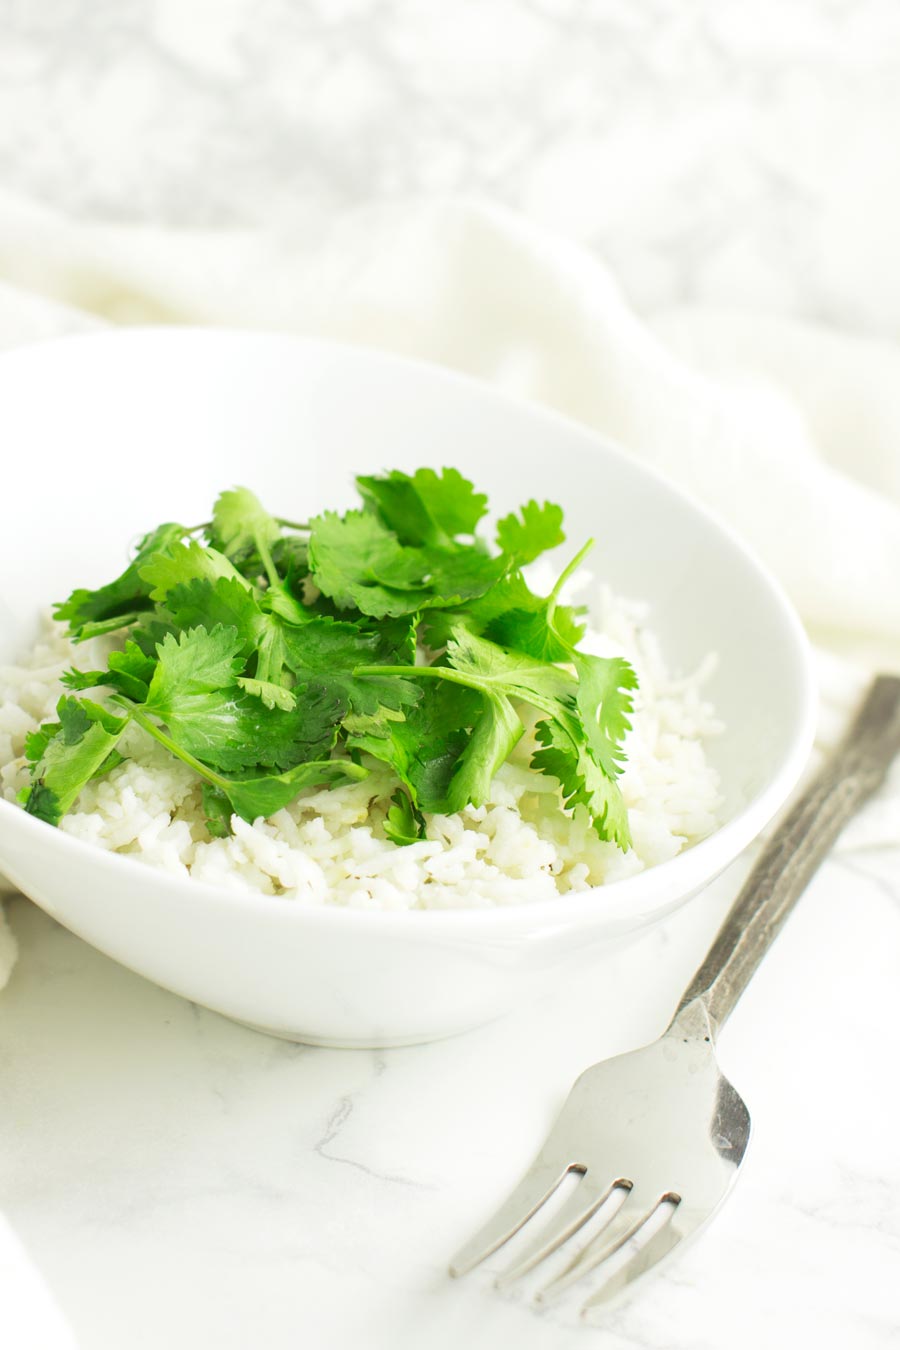 Cilantro Lime Cauliflower Rice recipe from acleanplate.com #paleo #aip #glutenfree